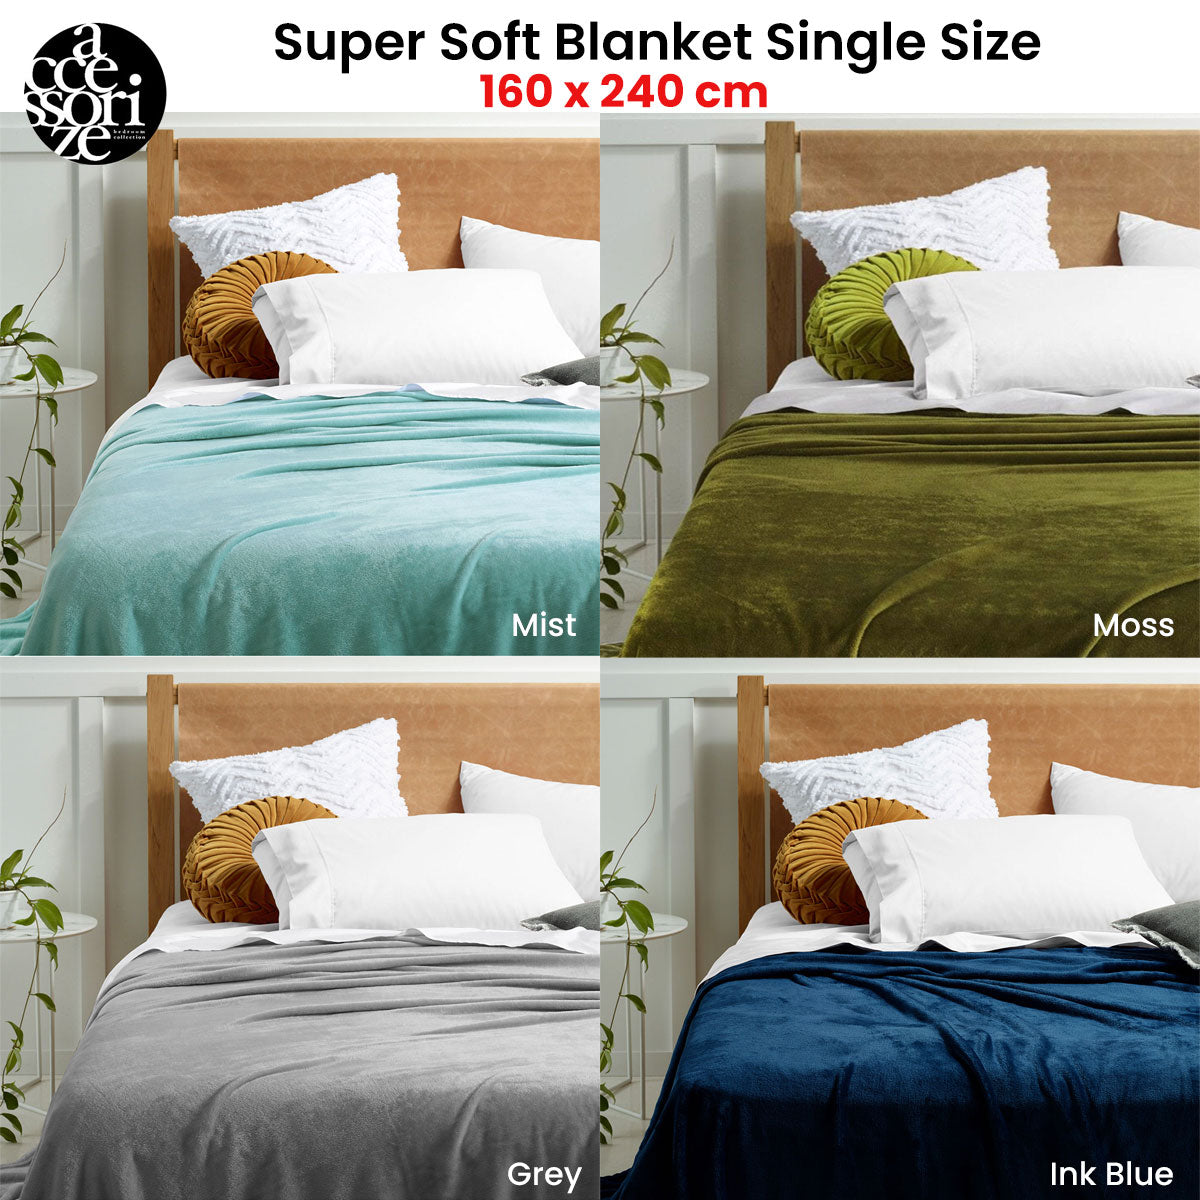 Accessorize Super Soft Blanket Single Size 160 x 240 cm Mist - BM House & Garden